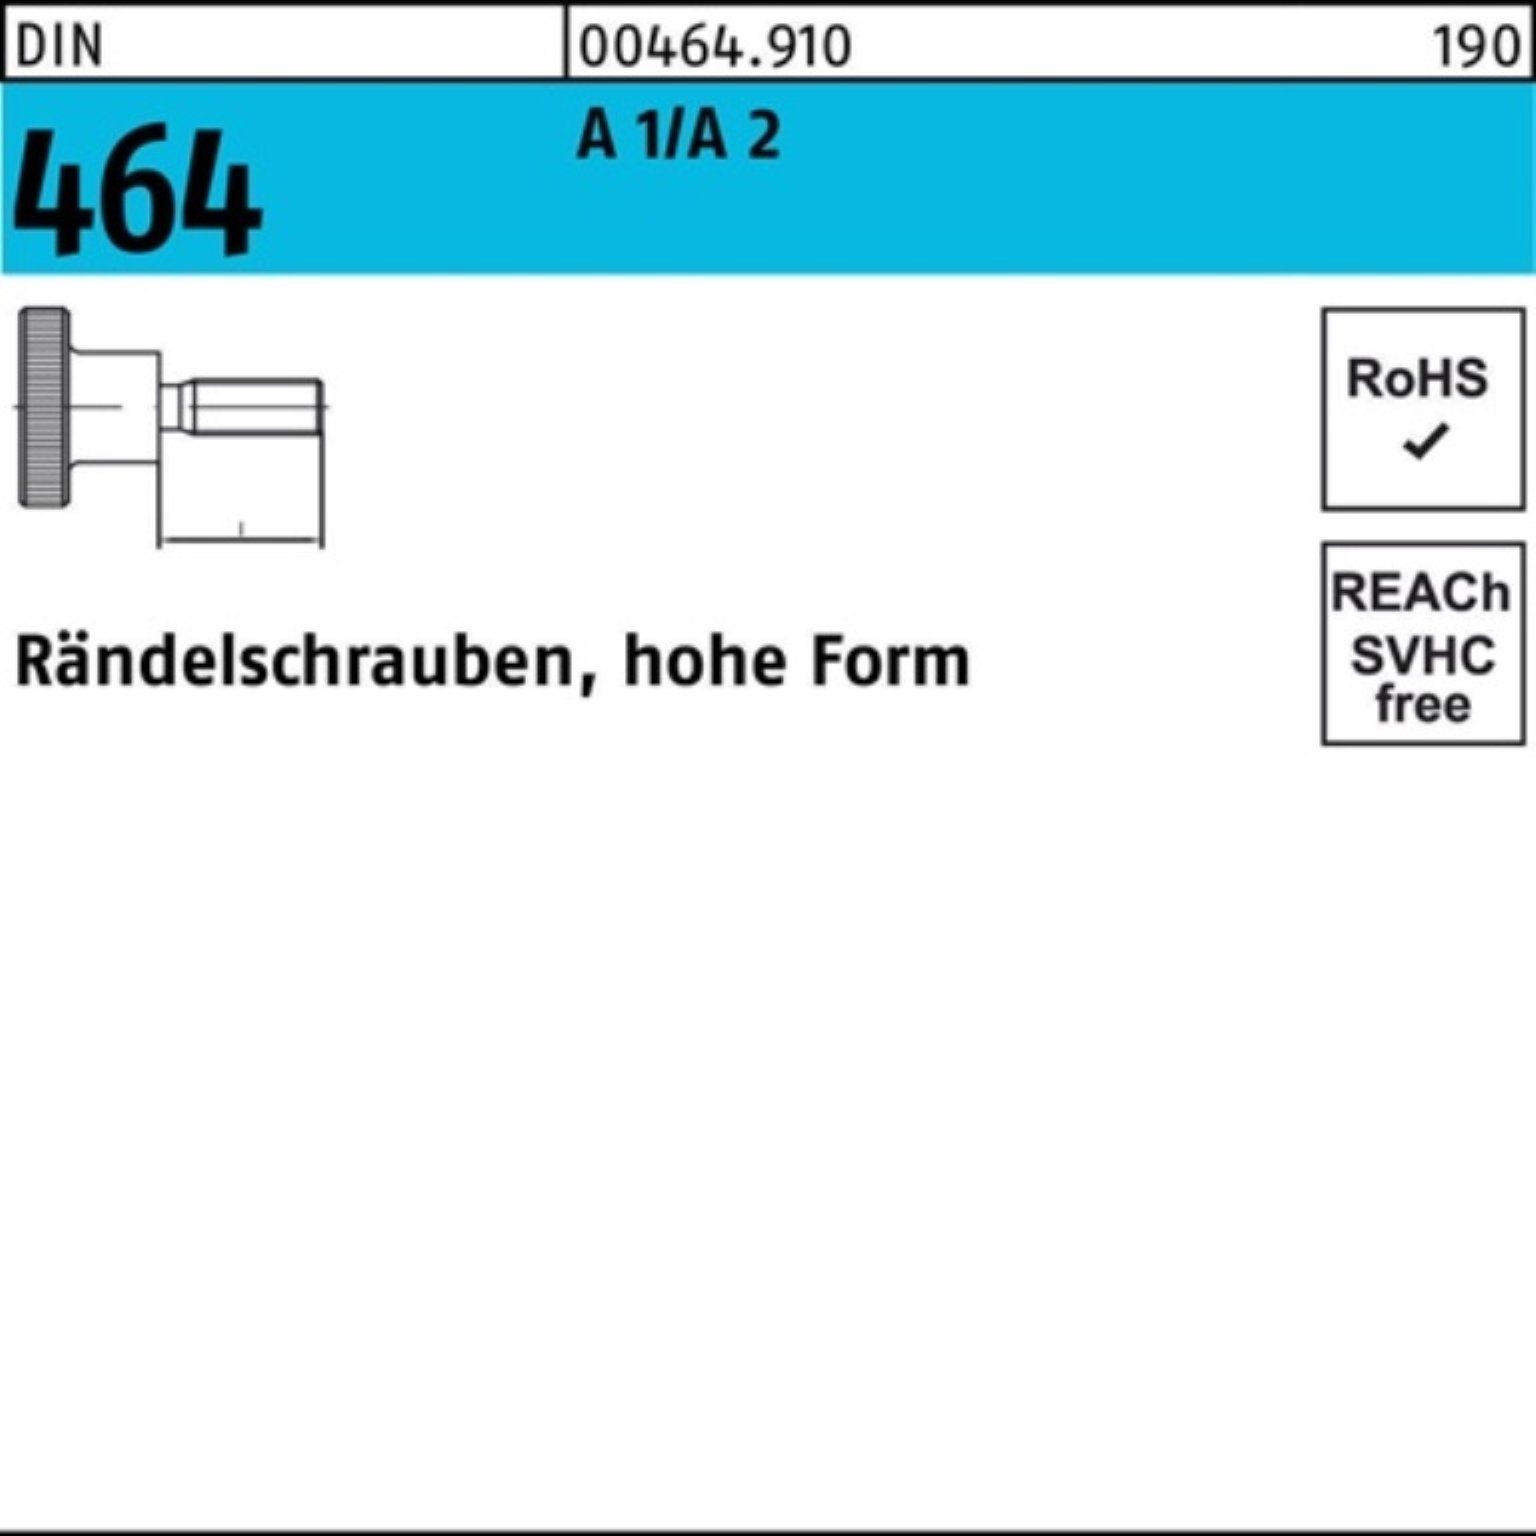 Reyher Schraube 100er hohe 464 DIN Stück FormM5x 1/A 2 Pack 25 A 8 Rändelschraube DI